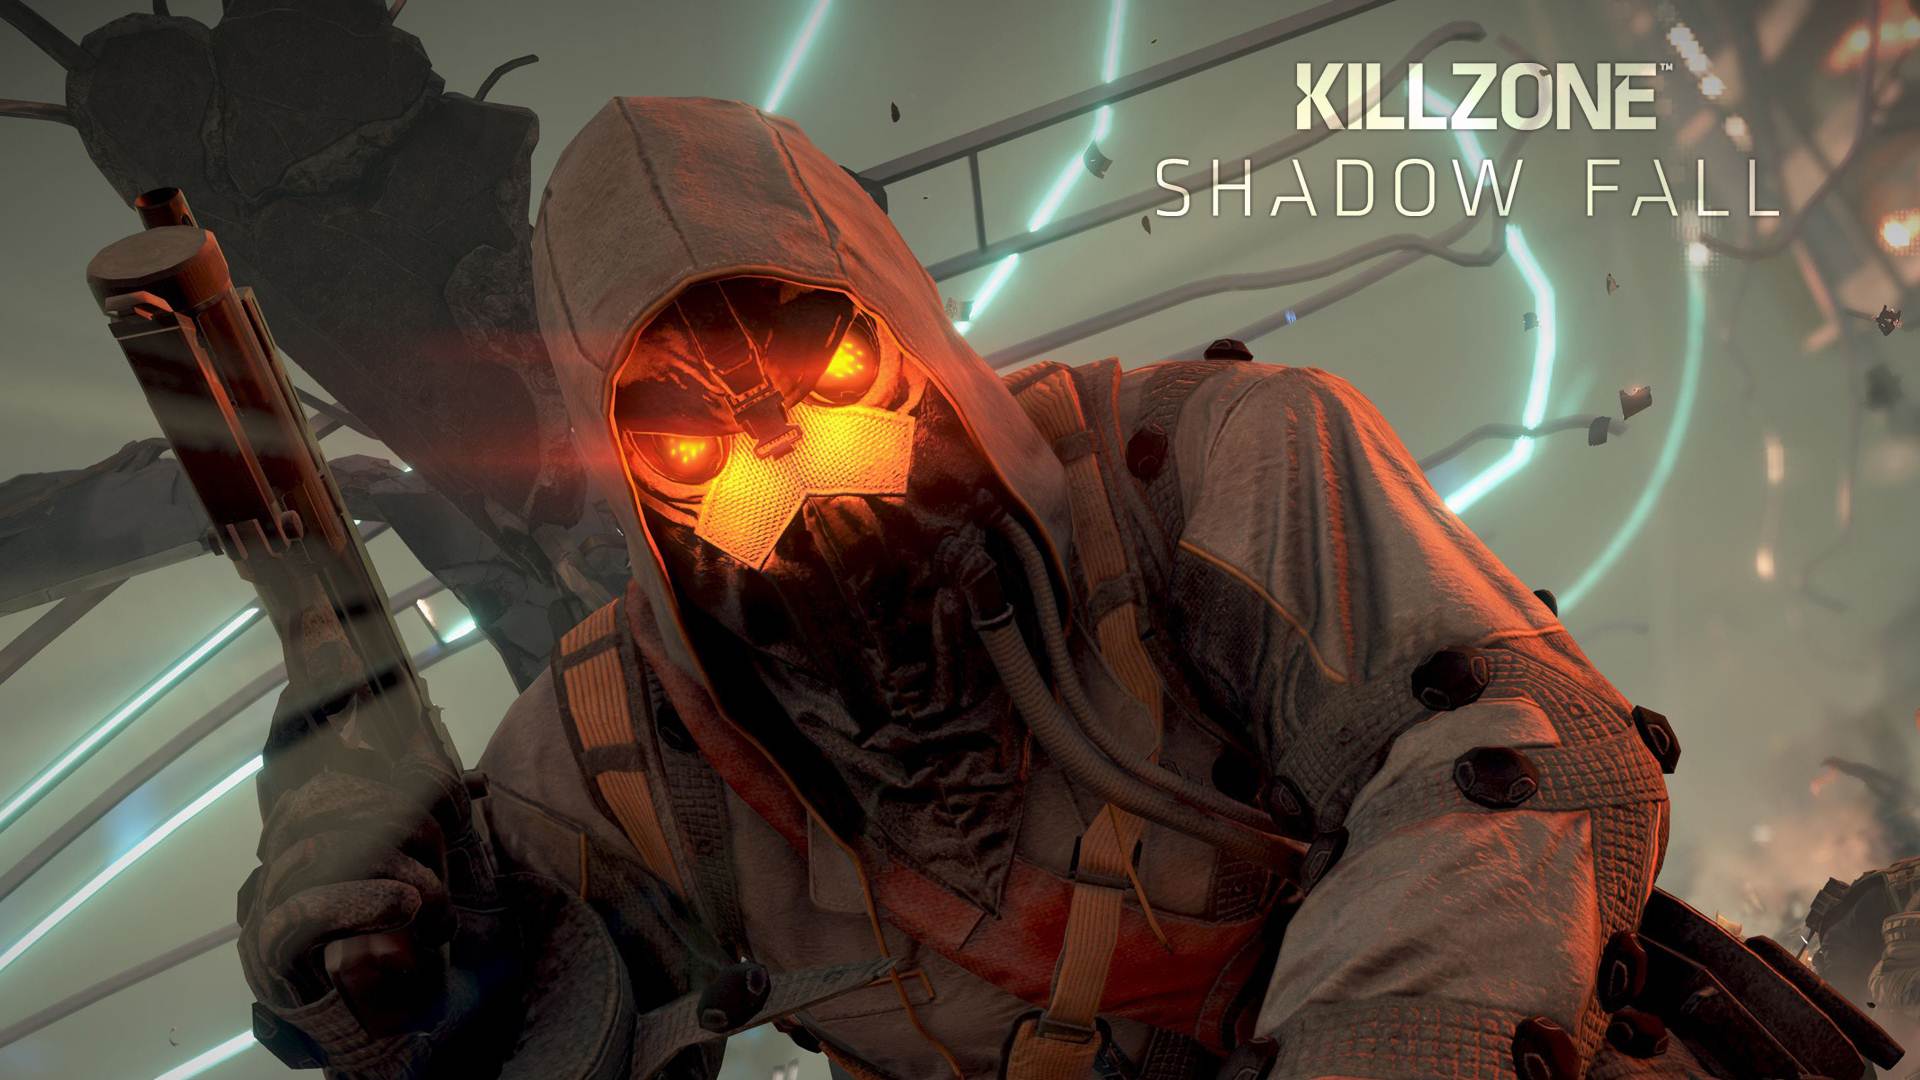 Amazing Looking Killzone: Shadow Fall Fan Made Wallpaper In 1080p